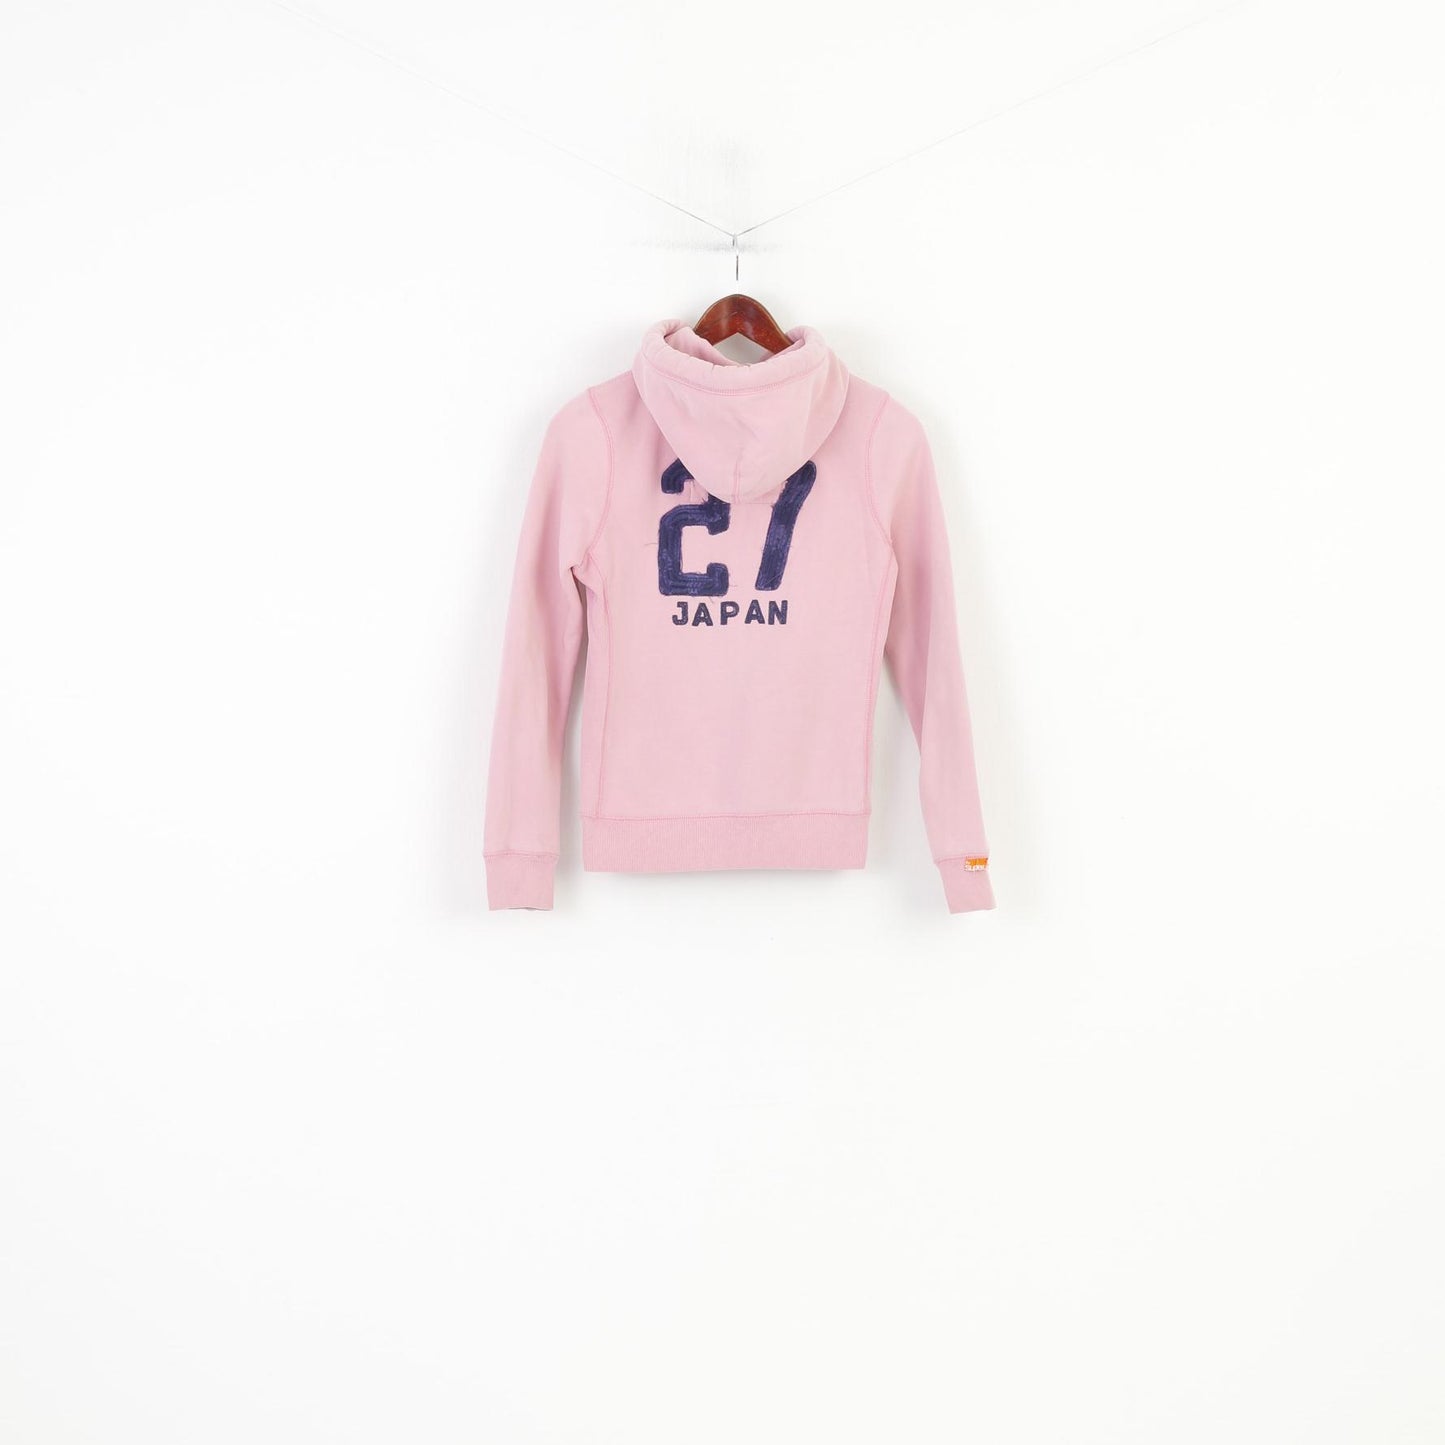 Superdry Women XS Sweatshirt Pink Cotton Full Zipper Hoodie Japan Sport Top